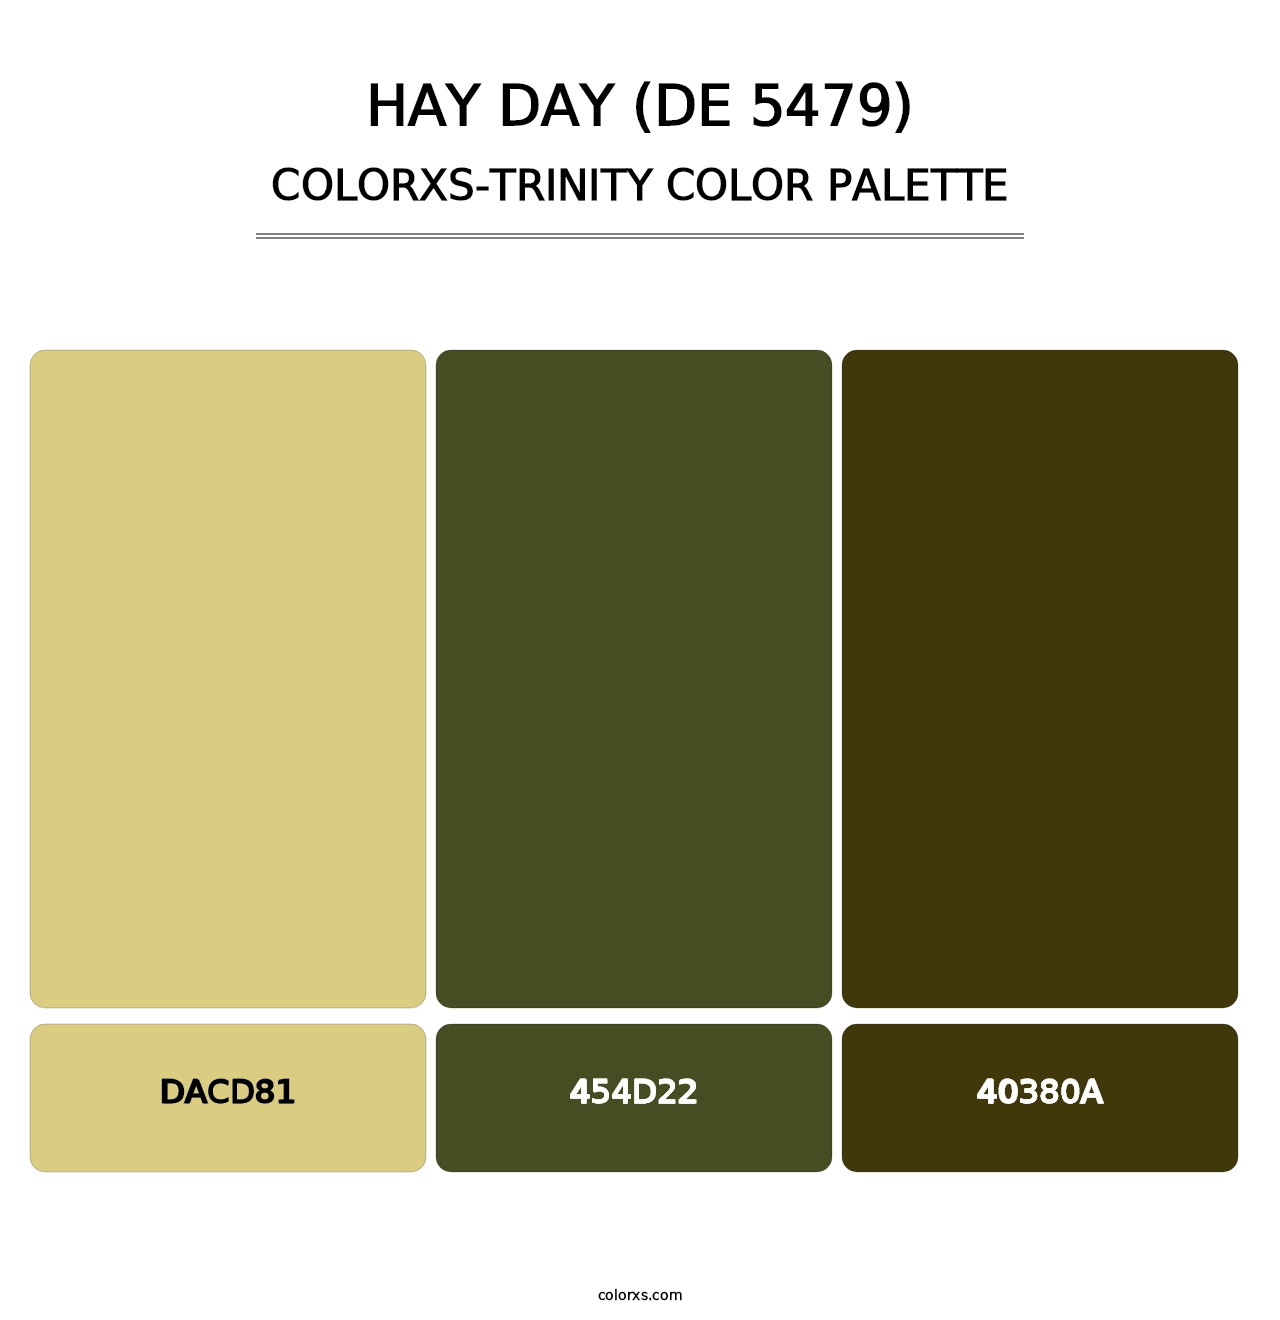 Hay Day (DE 5479) - Colorxs Trinity Palette